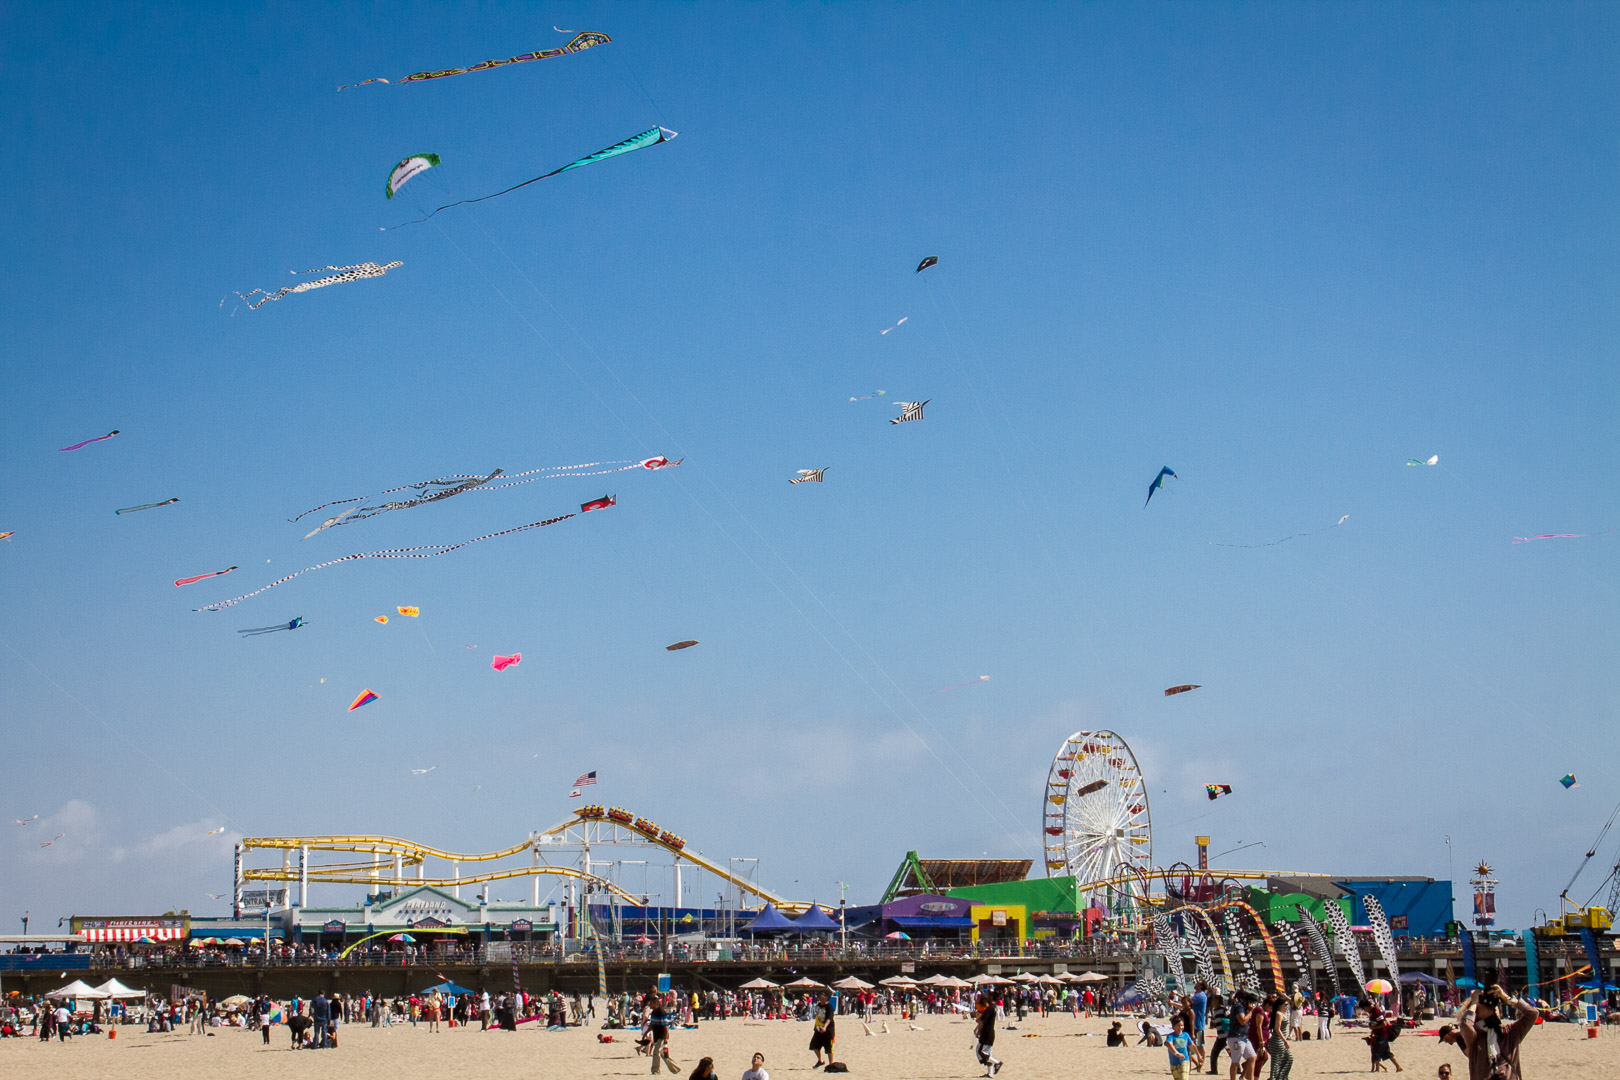 Kite festival at the beach in Santa Monica, California